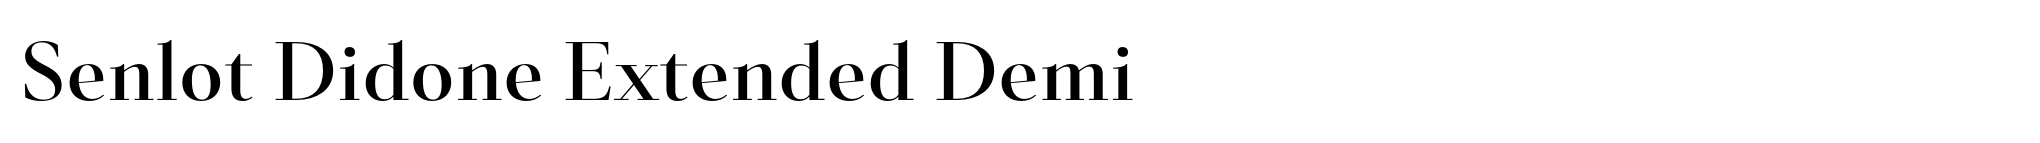 Senlot Didone Extended Demi image